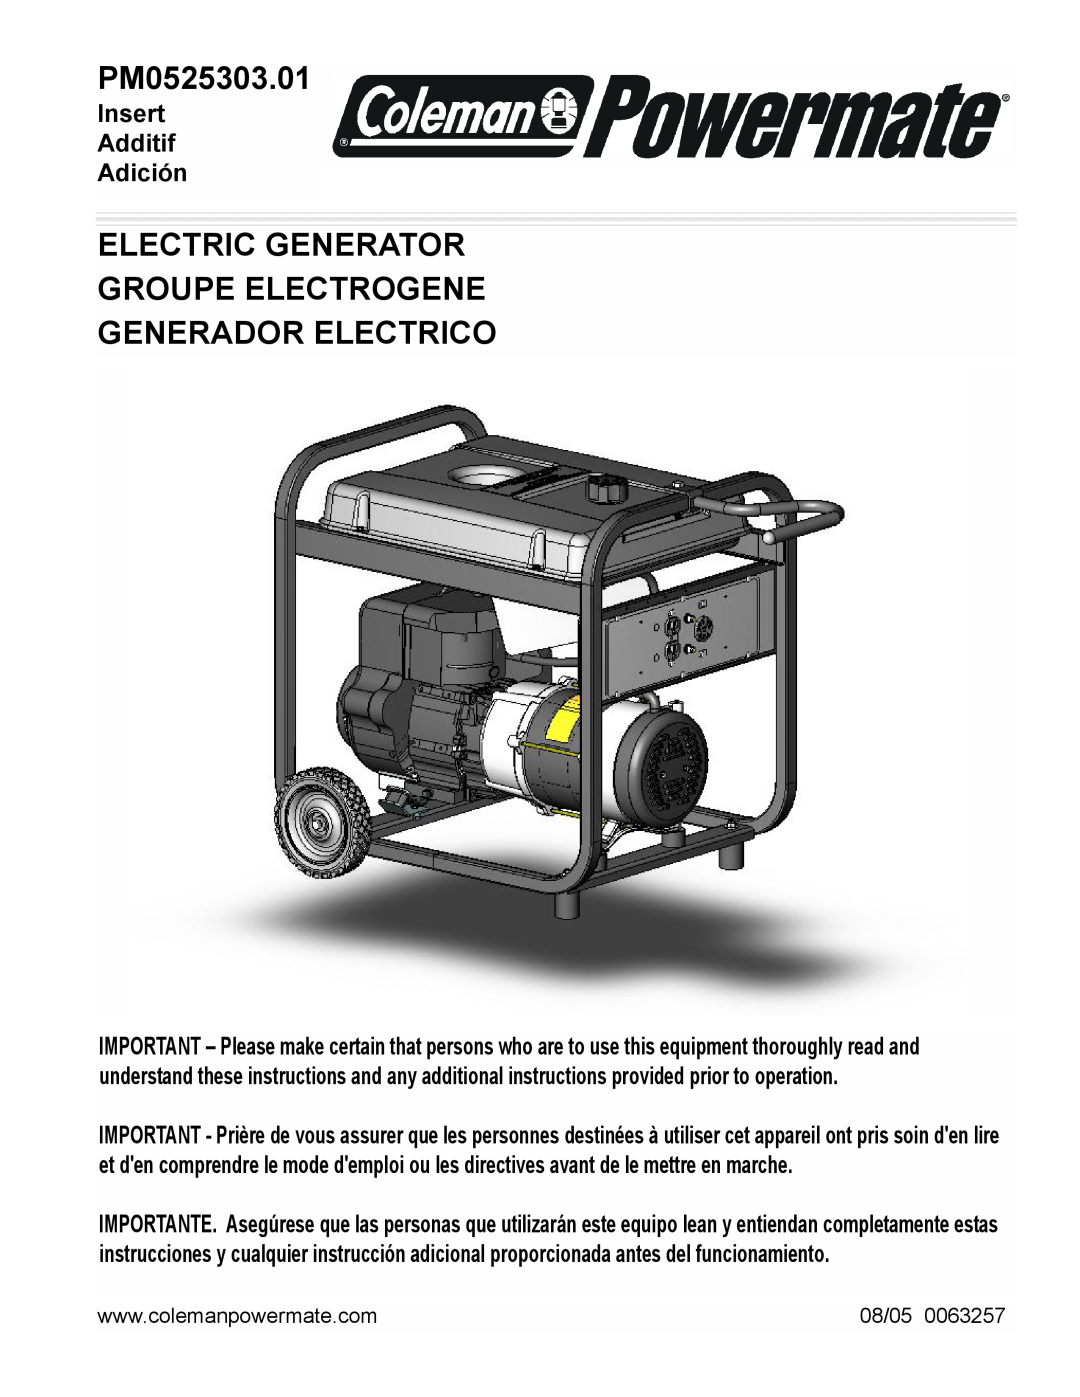 Powermate PM0525303.01 manual Electric Generator Groupe Electrogene, Generador Electrico, Insert Additif Adición, 08/05 